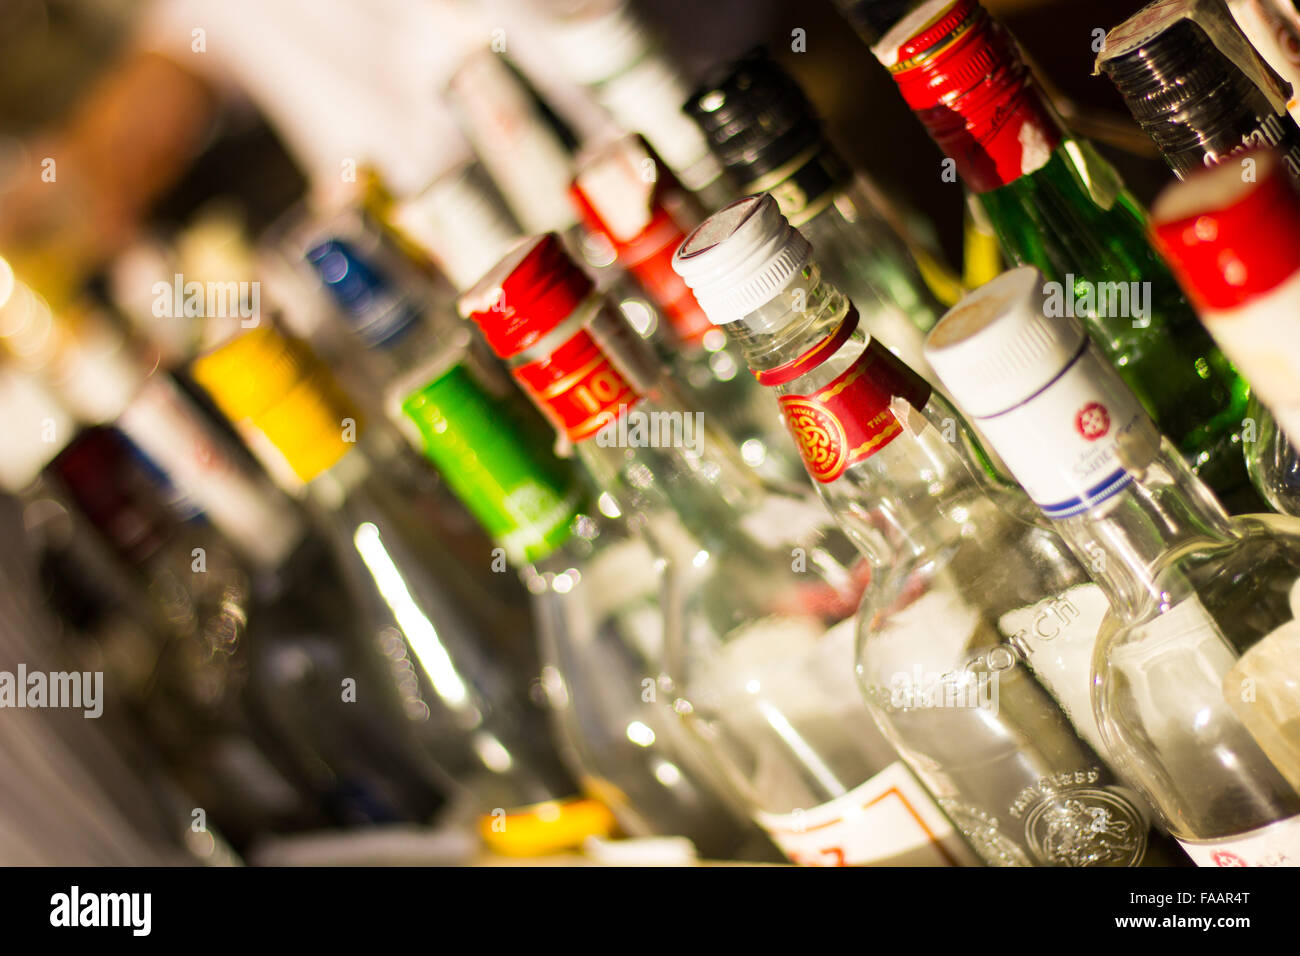 Various drinks bottles and bottle tops Stock Photo